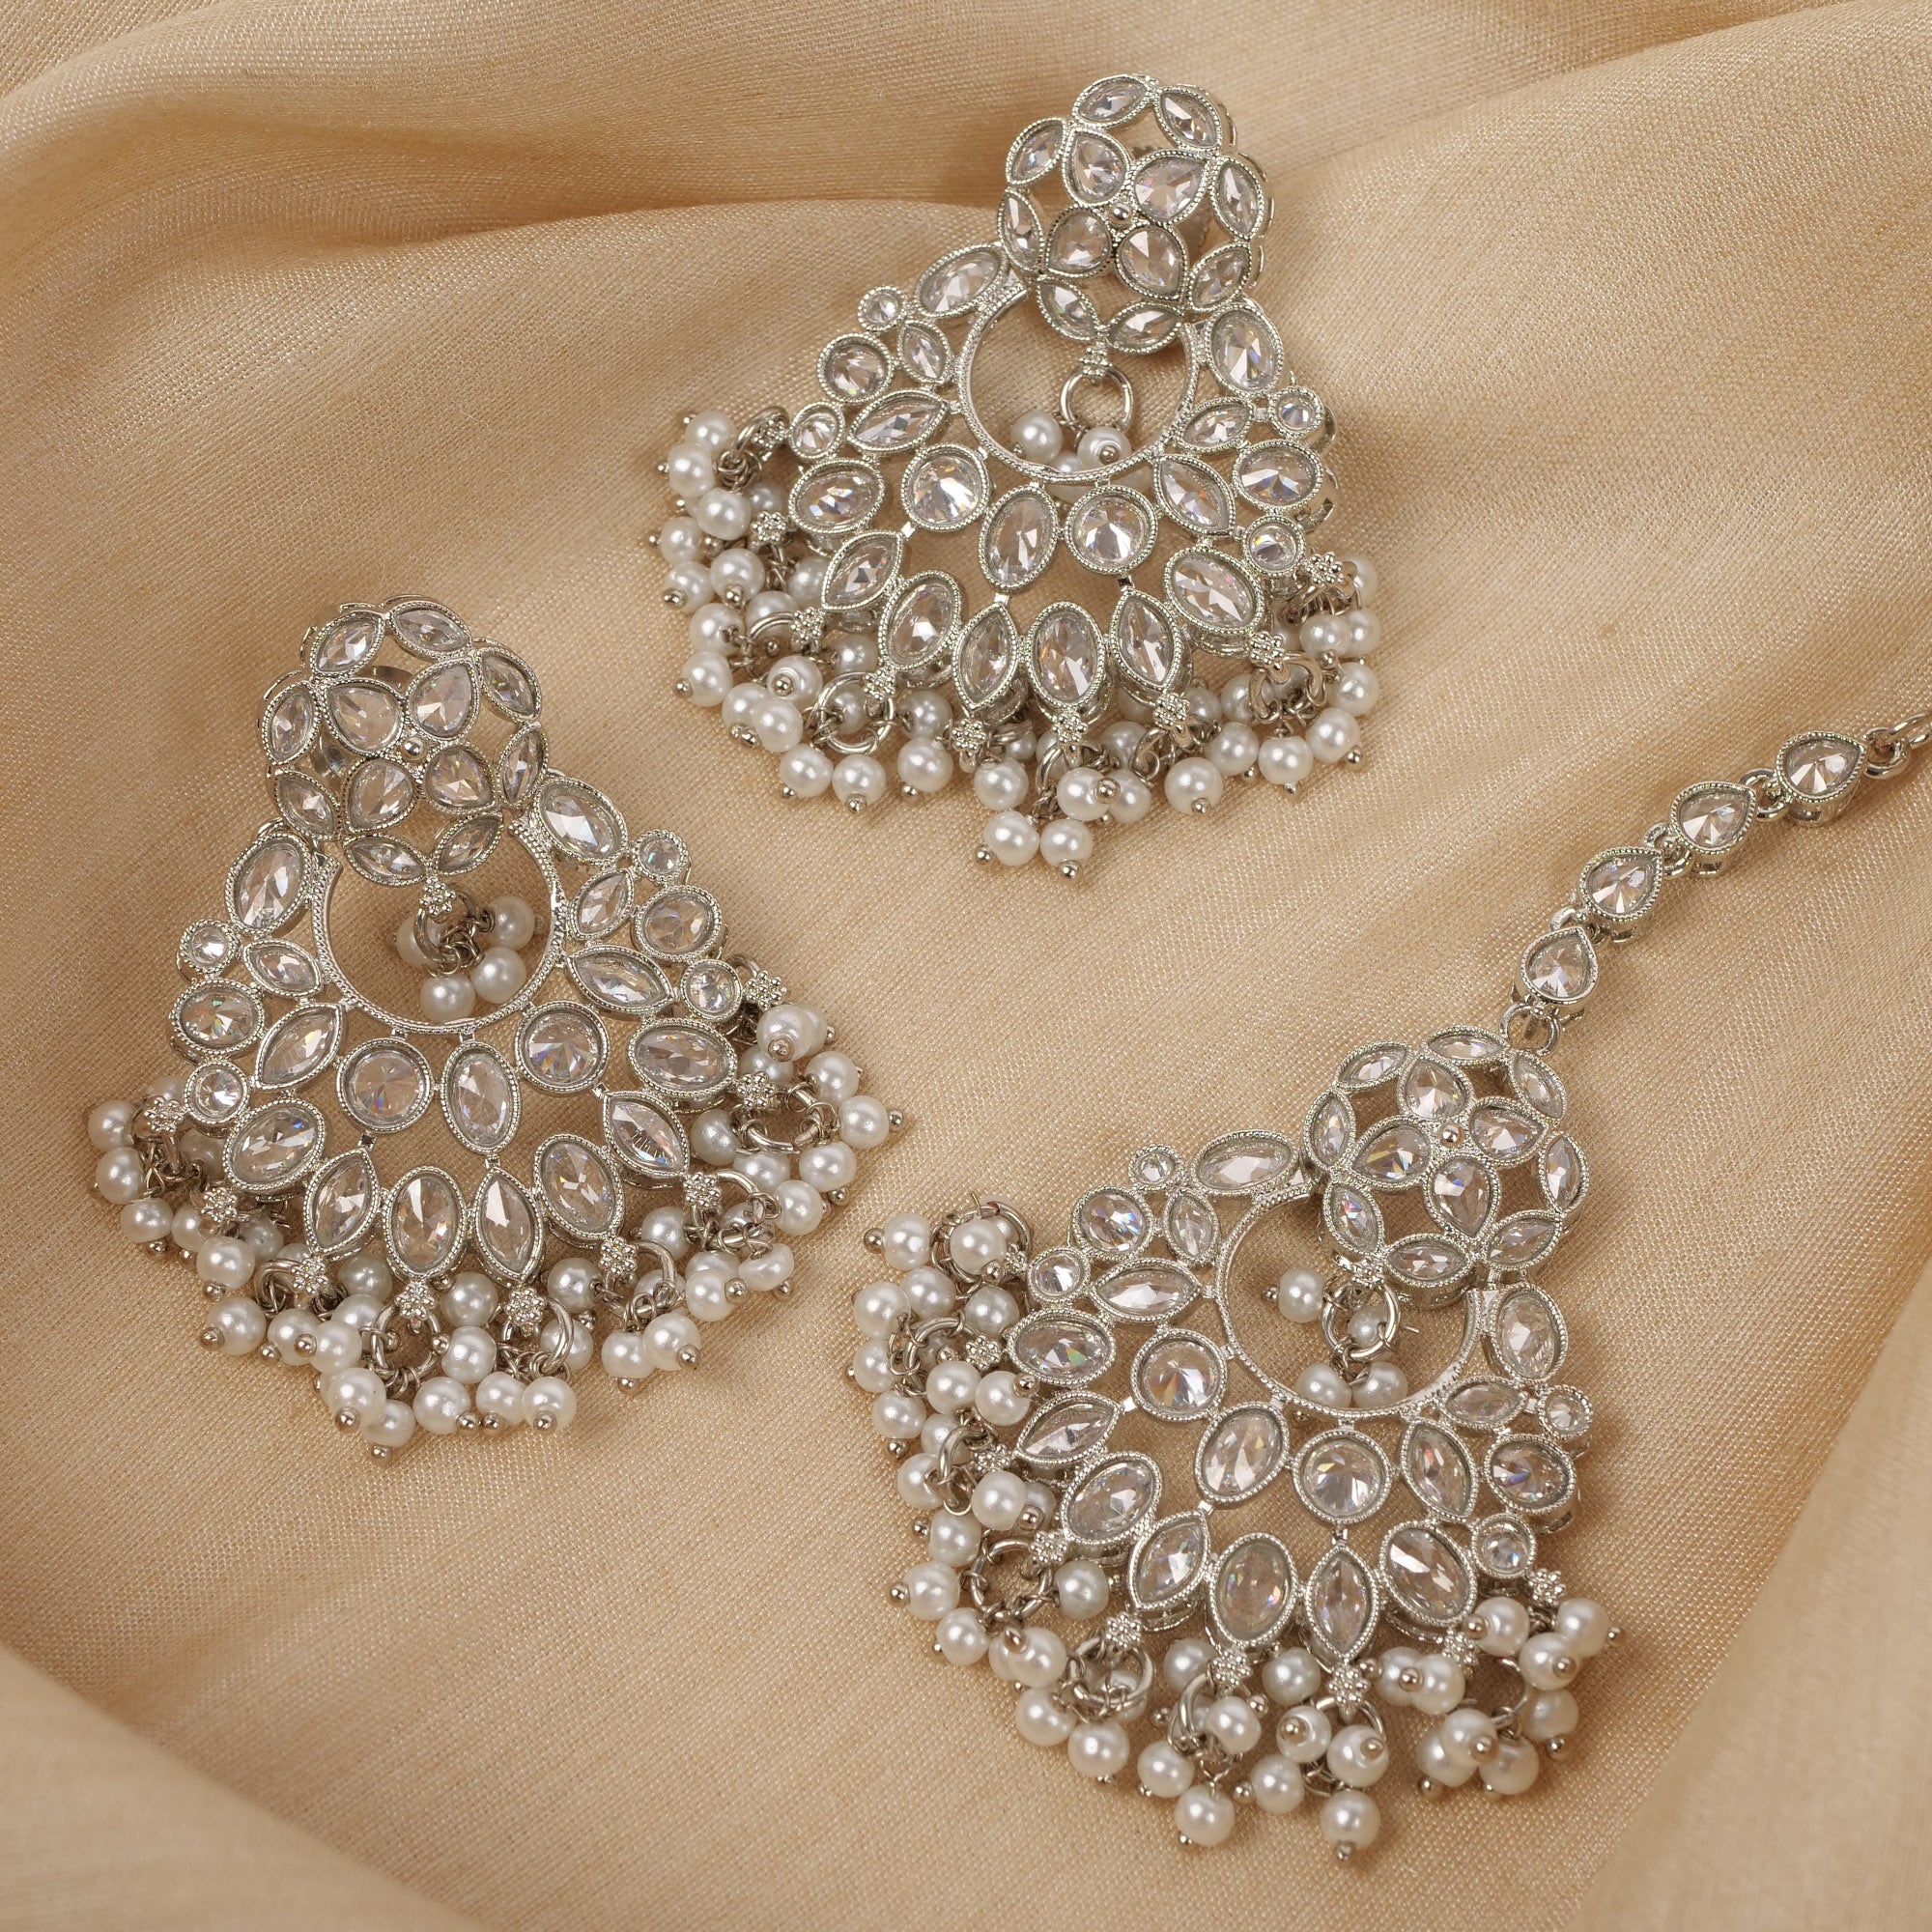 Small Ethnic Crystal Earrings in Rhodium